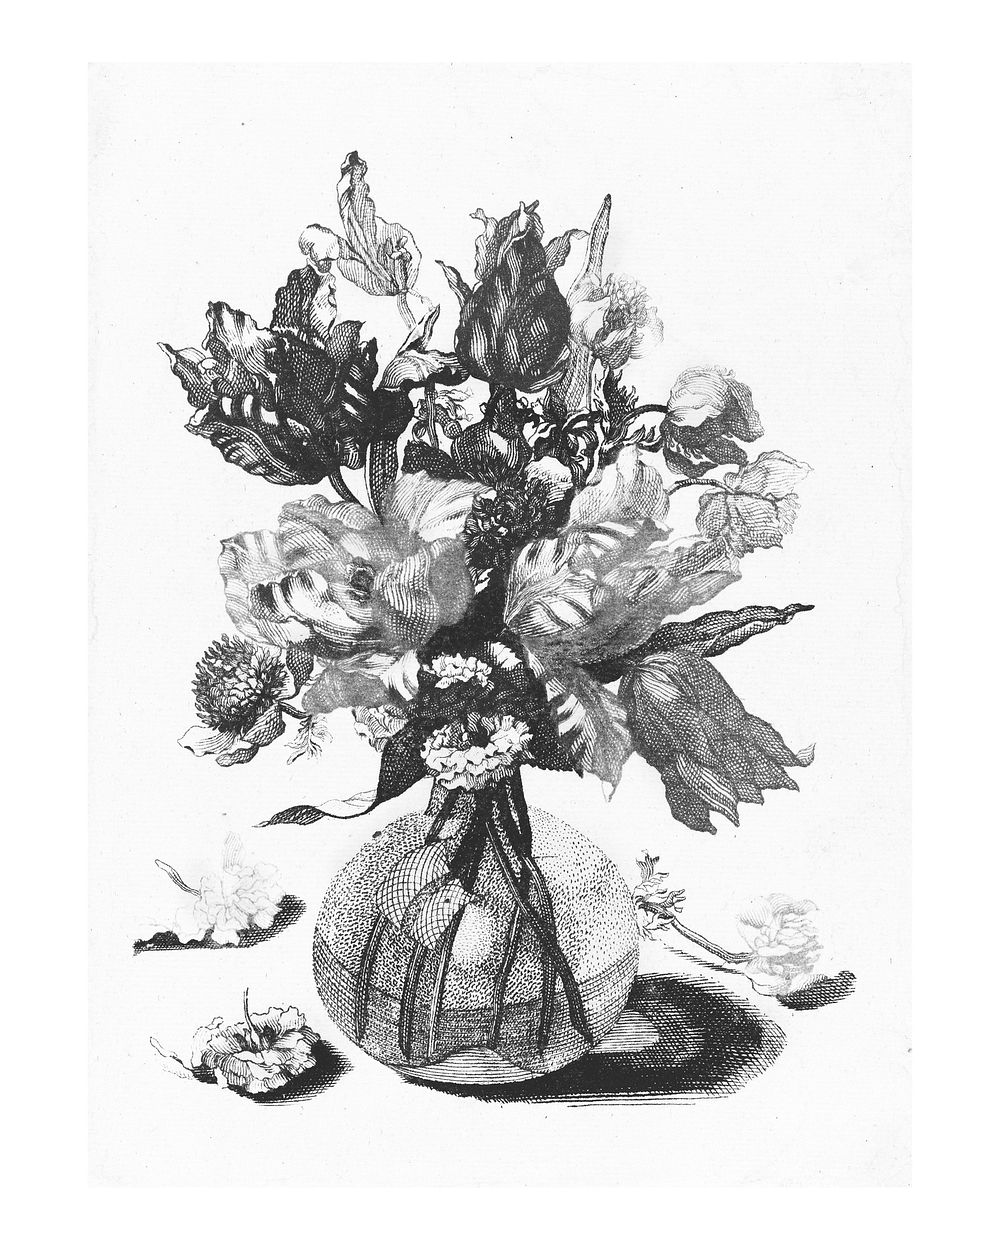 Flowers in a vase vintage illustration wall art print and poster design remix from original artwork of Johan Teyler.